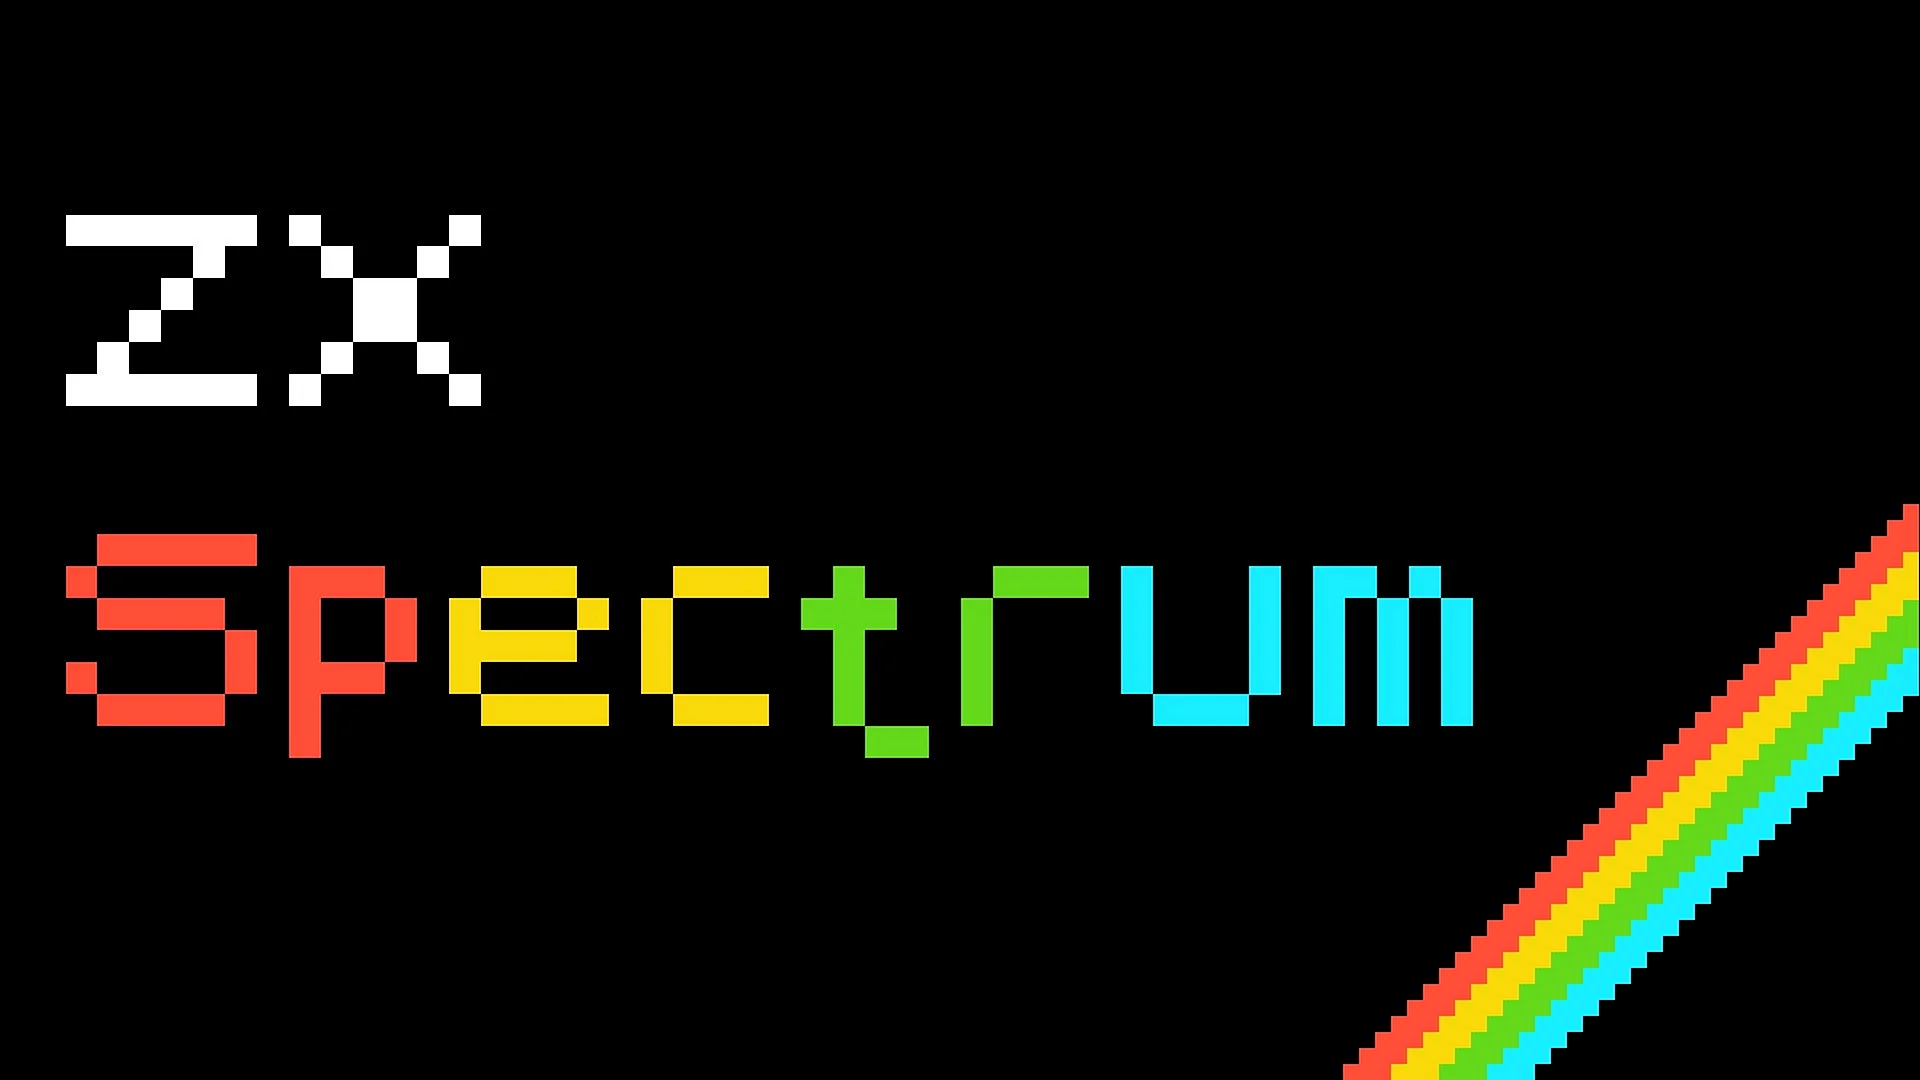 Zx Spectrum Logo Wallpaper